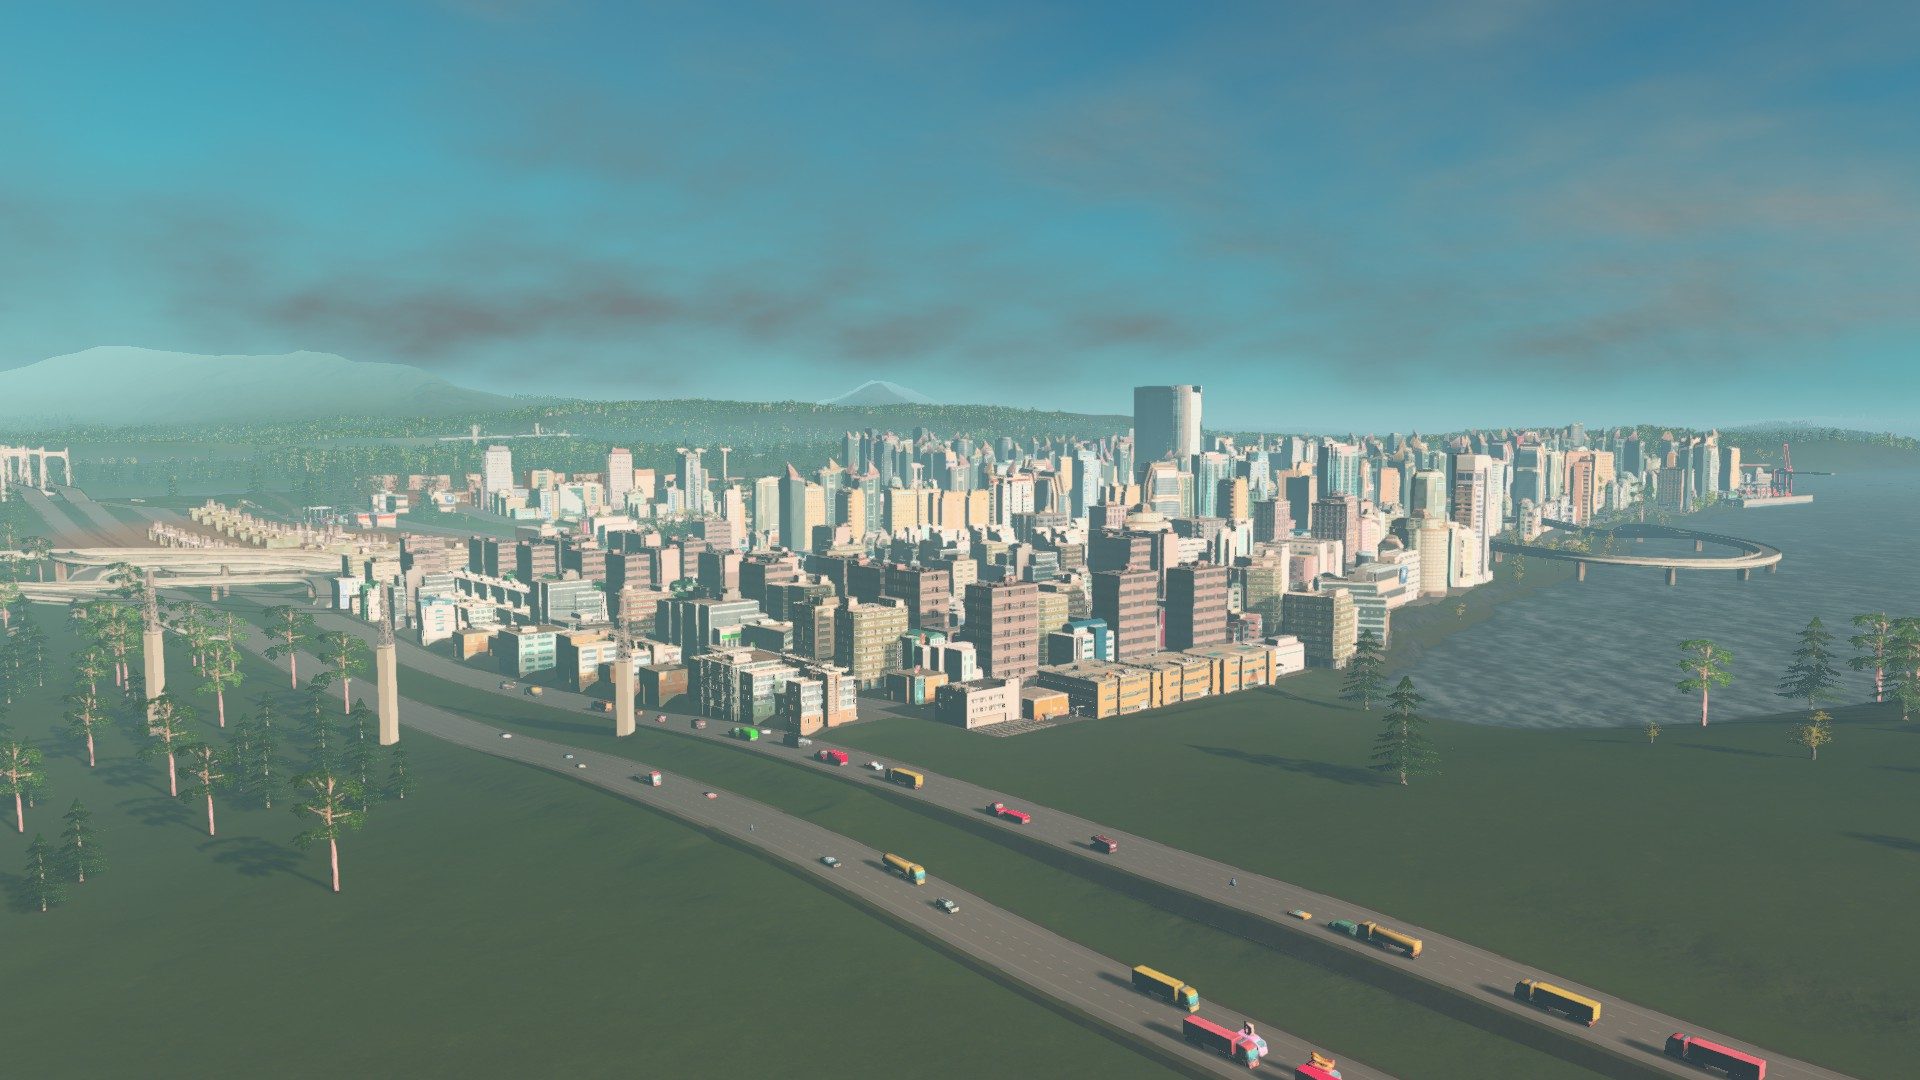 My new city